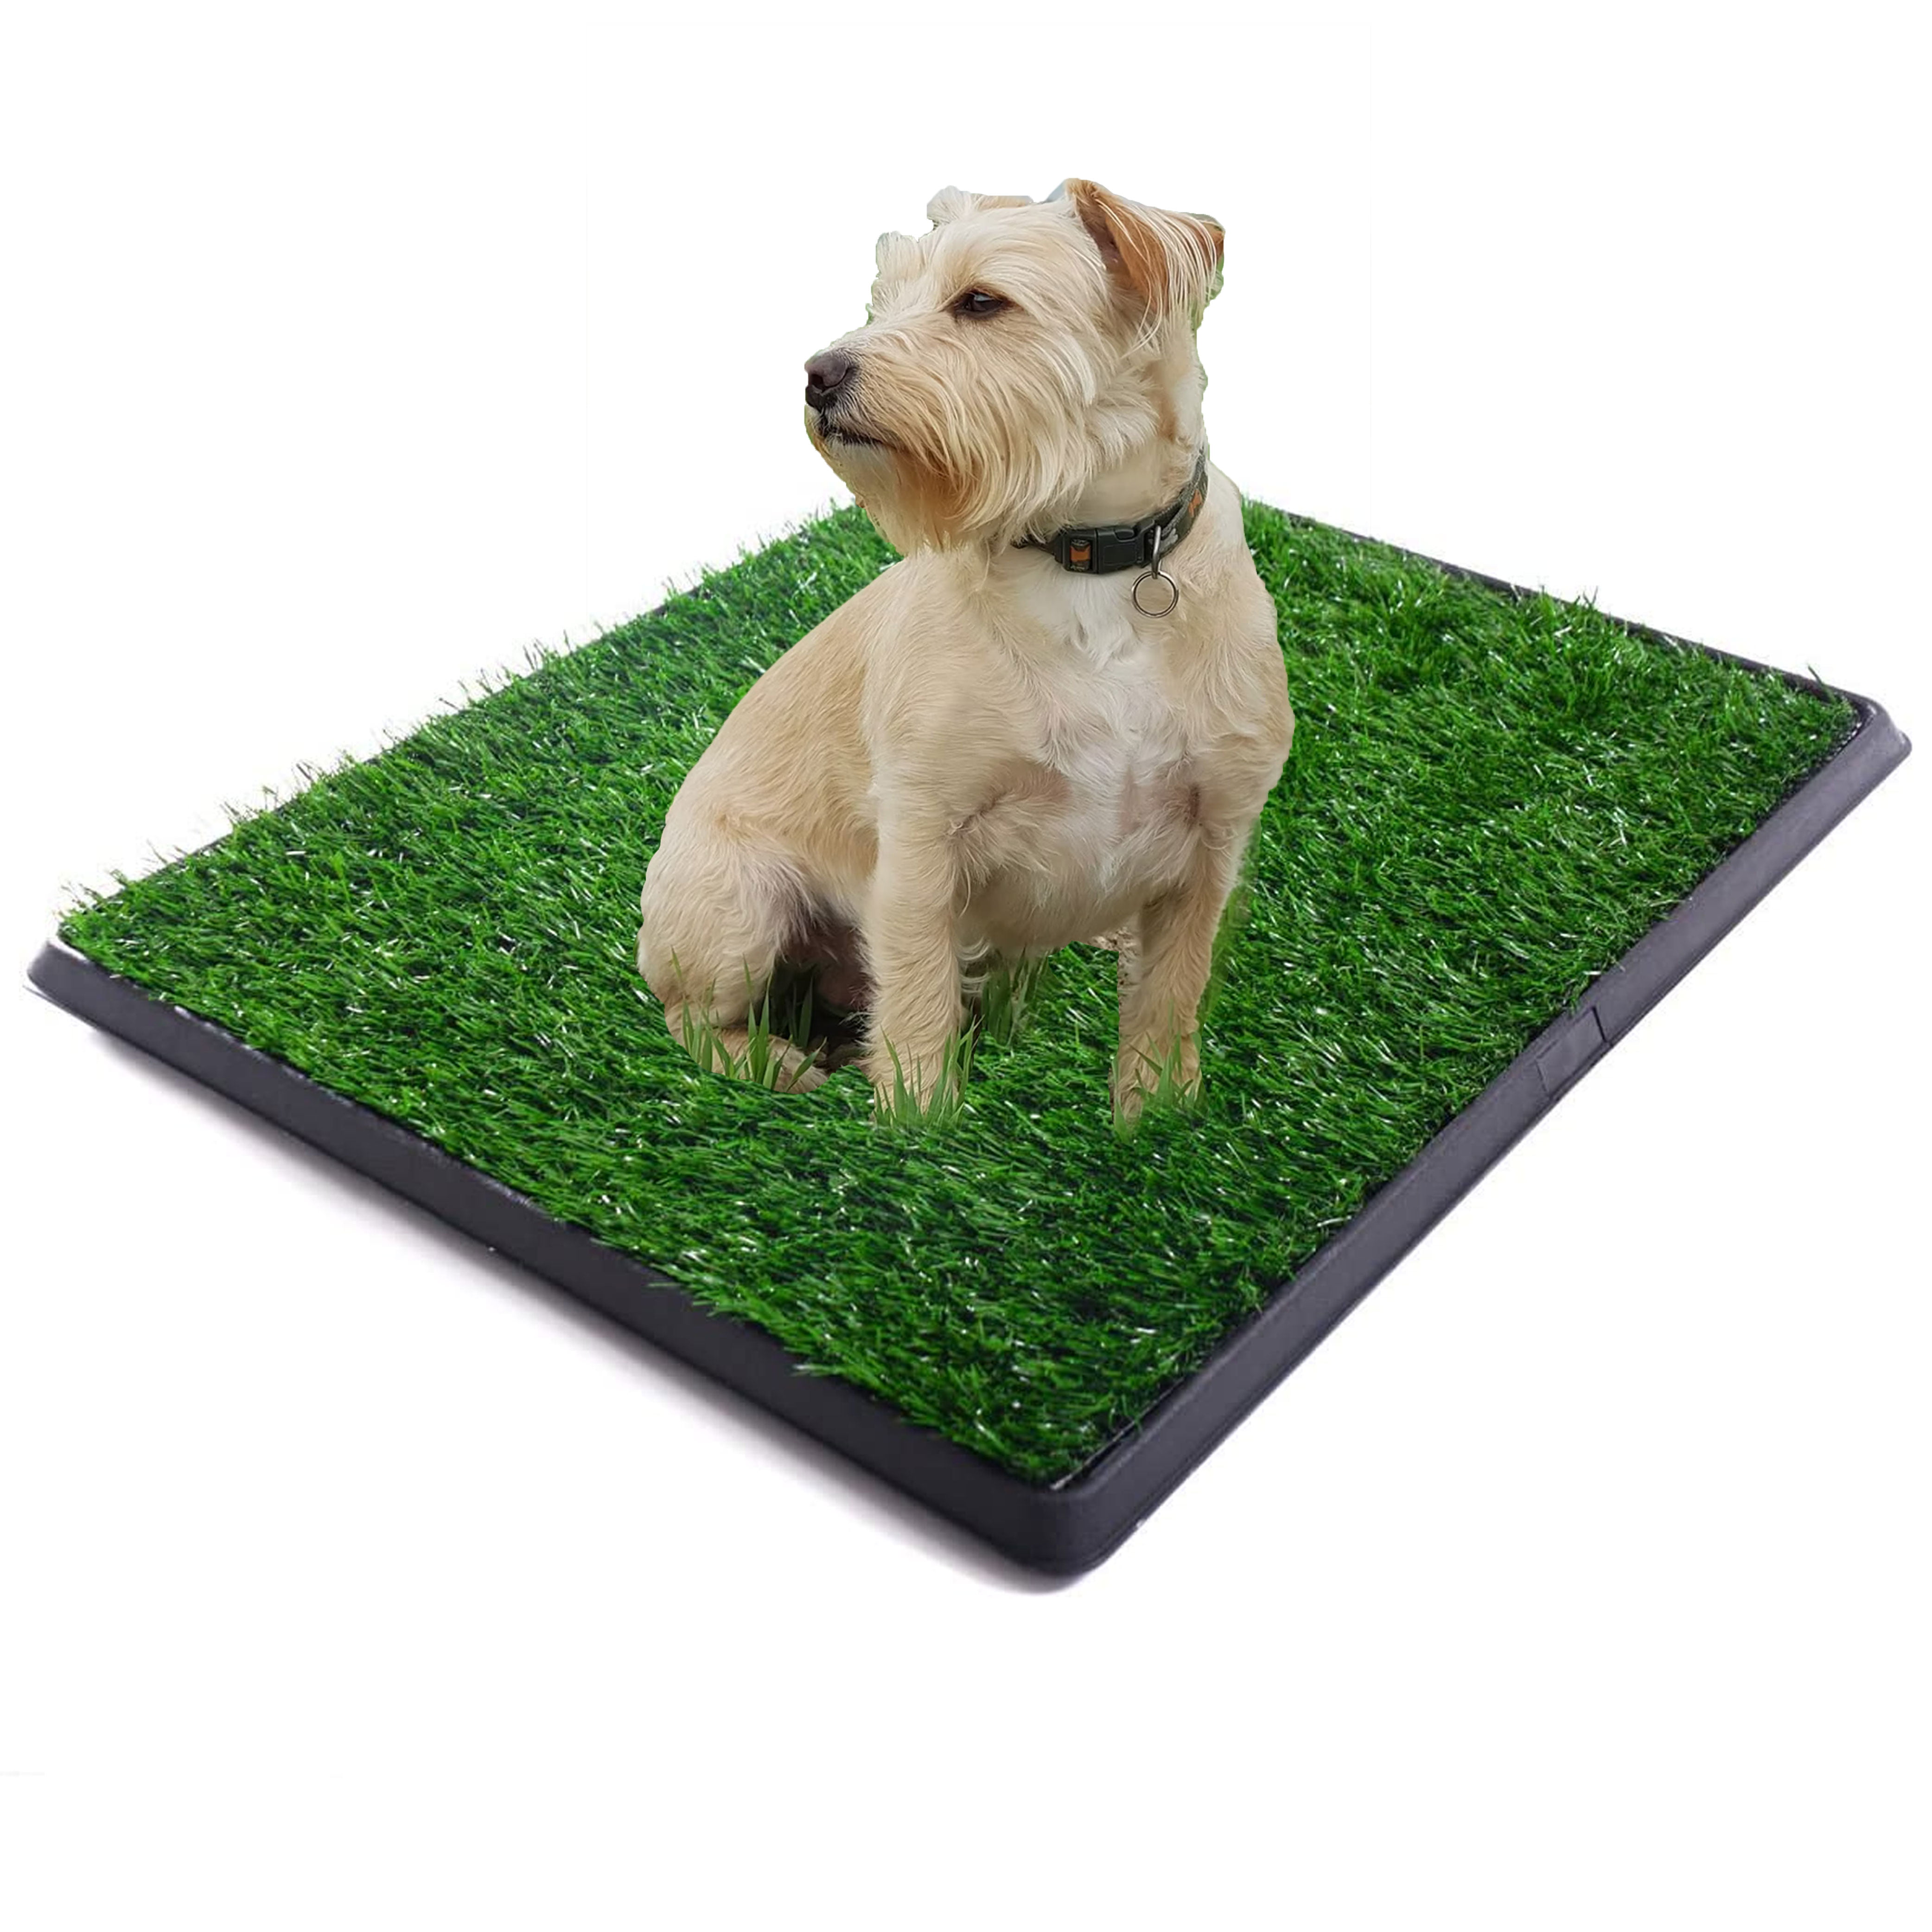 OlimP-Shop Dog Potty Home Training Toilet Pad Grass Surface Pet Park Mat Outdoor Indoor